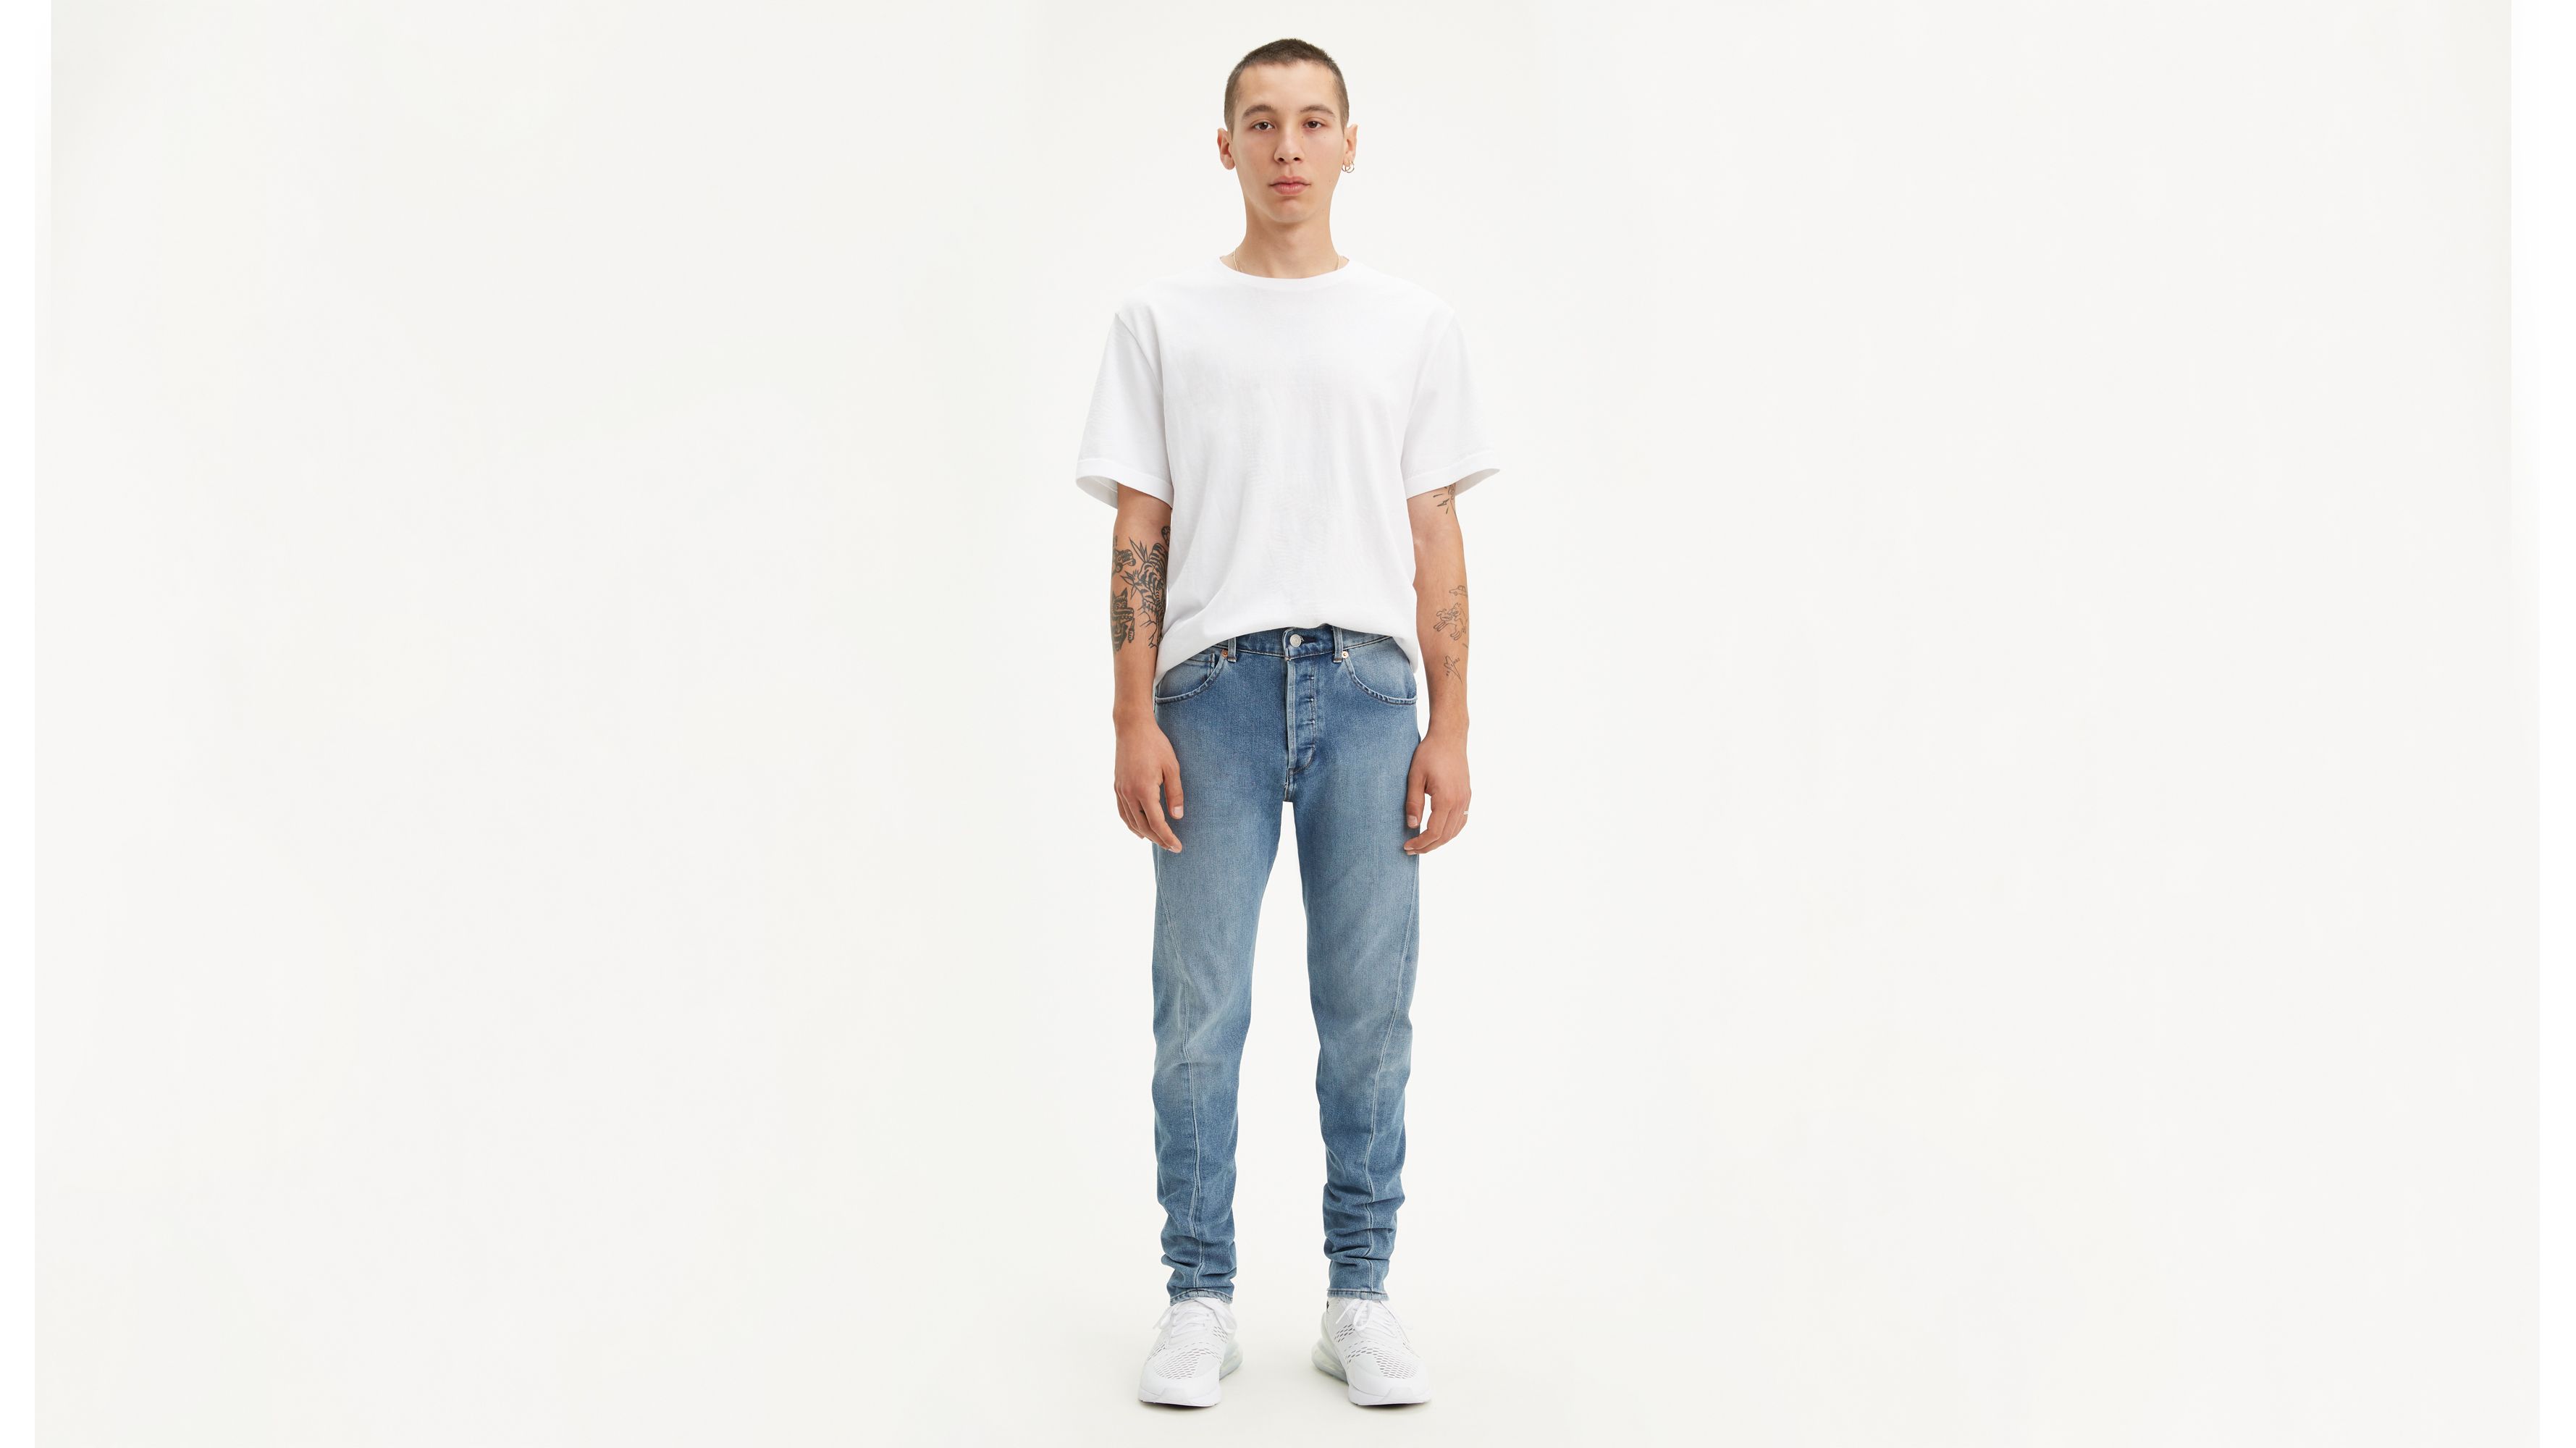 levis 501 engineered jeans